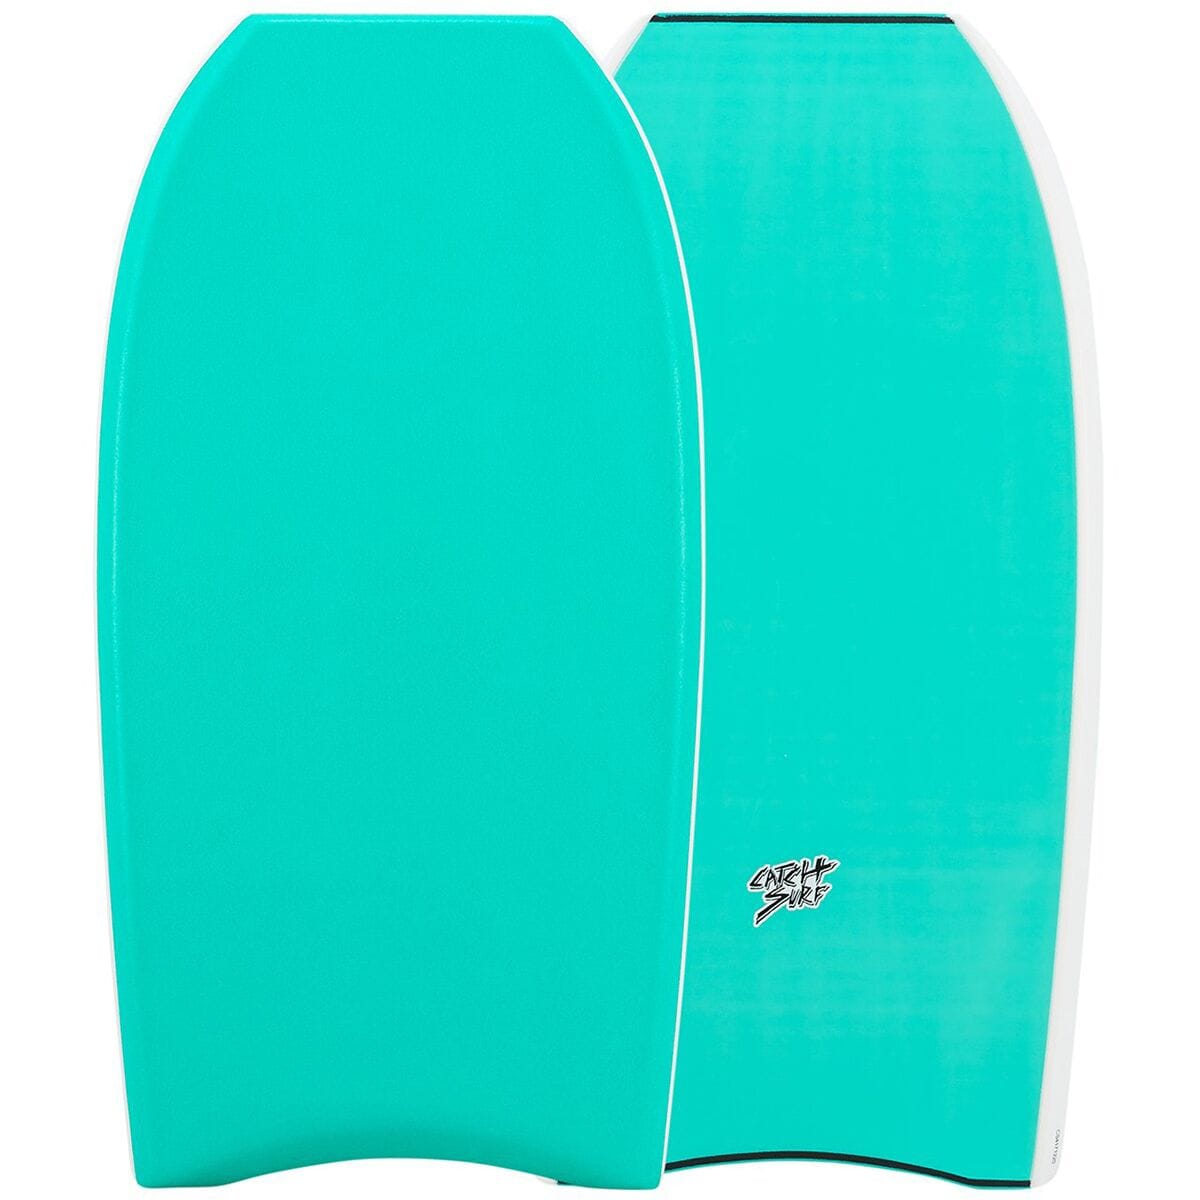 bout Entertainment kalkoen Catch Surf Blank Series 42 PRO Bodyboard | eBay